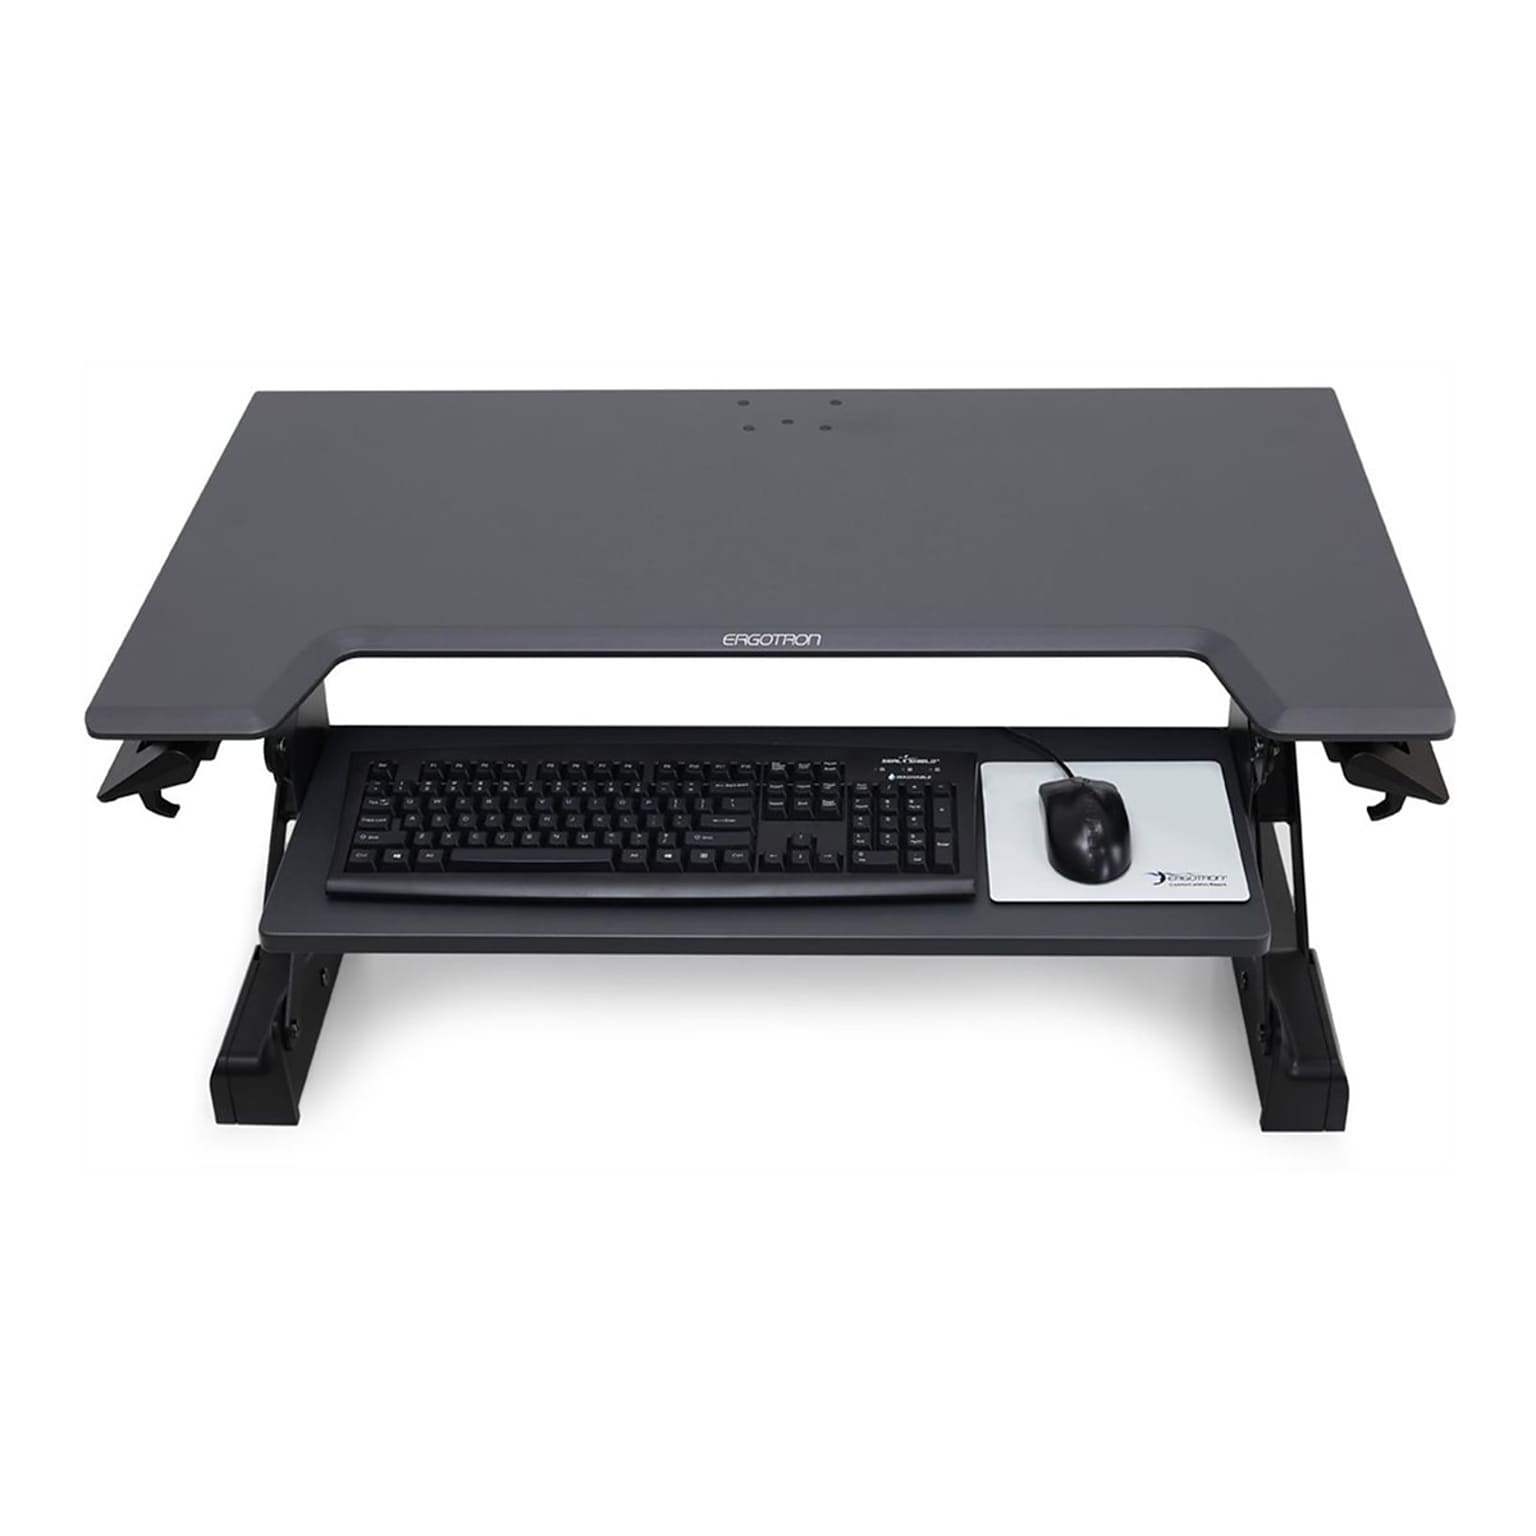 Ergotron WorkFit-TL 38W Adjustable Standing Desk Converter, Black/Dark Gray (33-406-085)